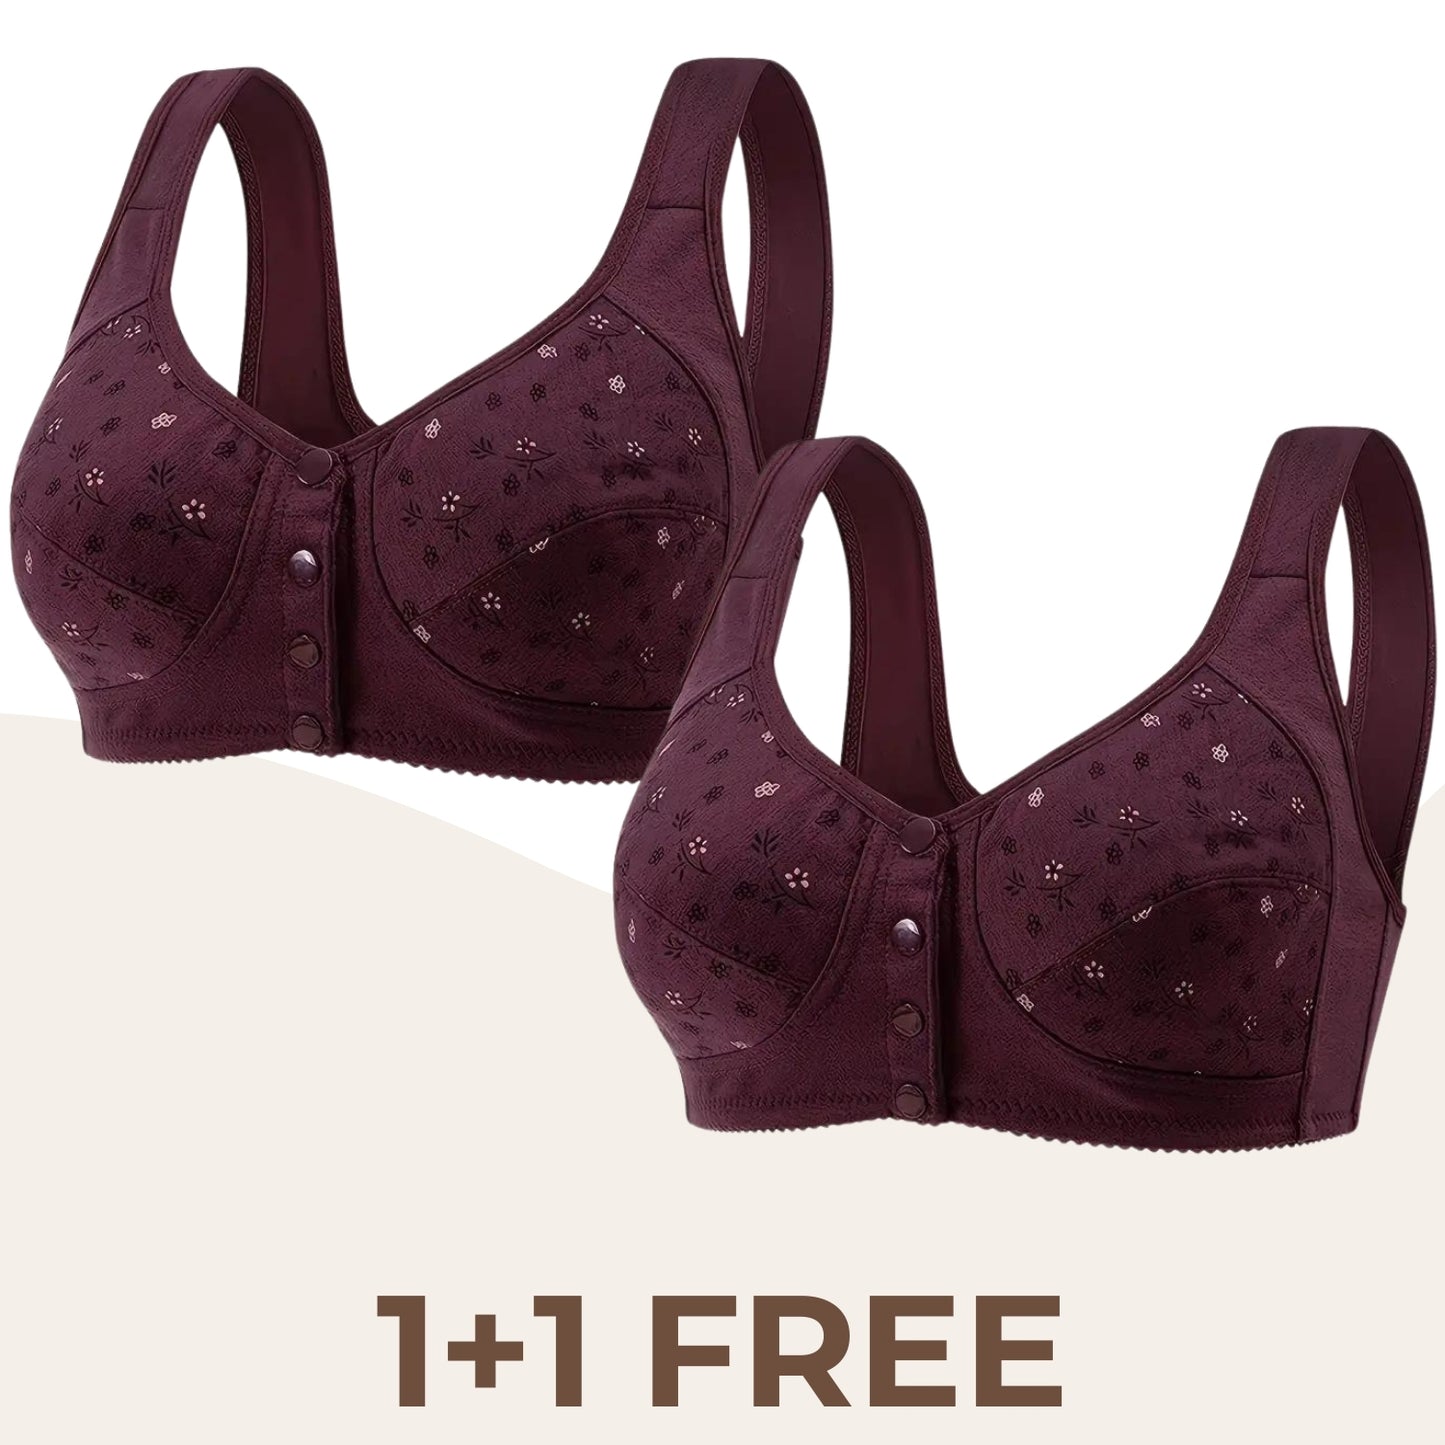 Volupta - (1+1 free) Comfortable support bra with closure